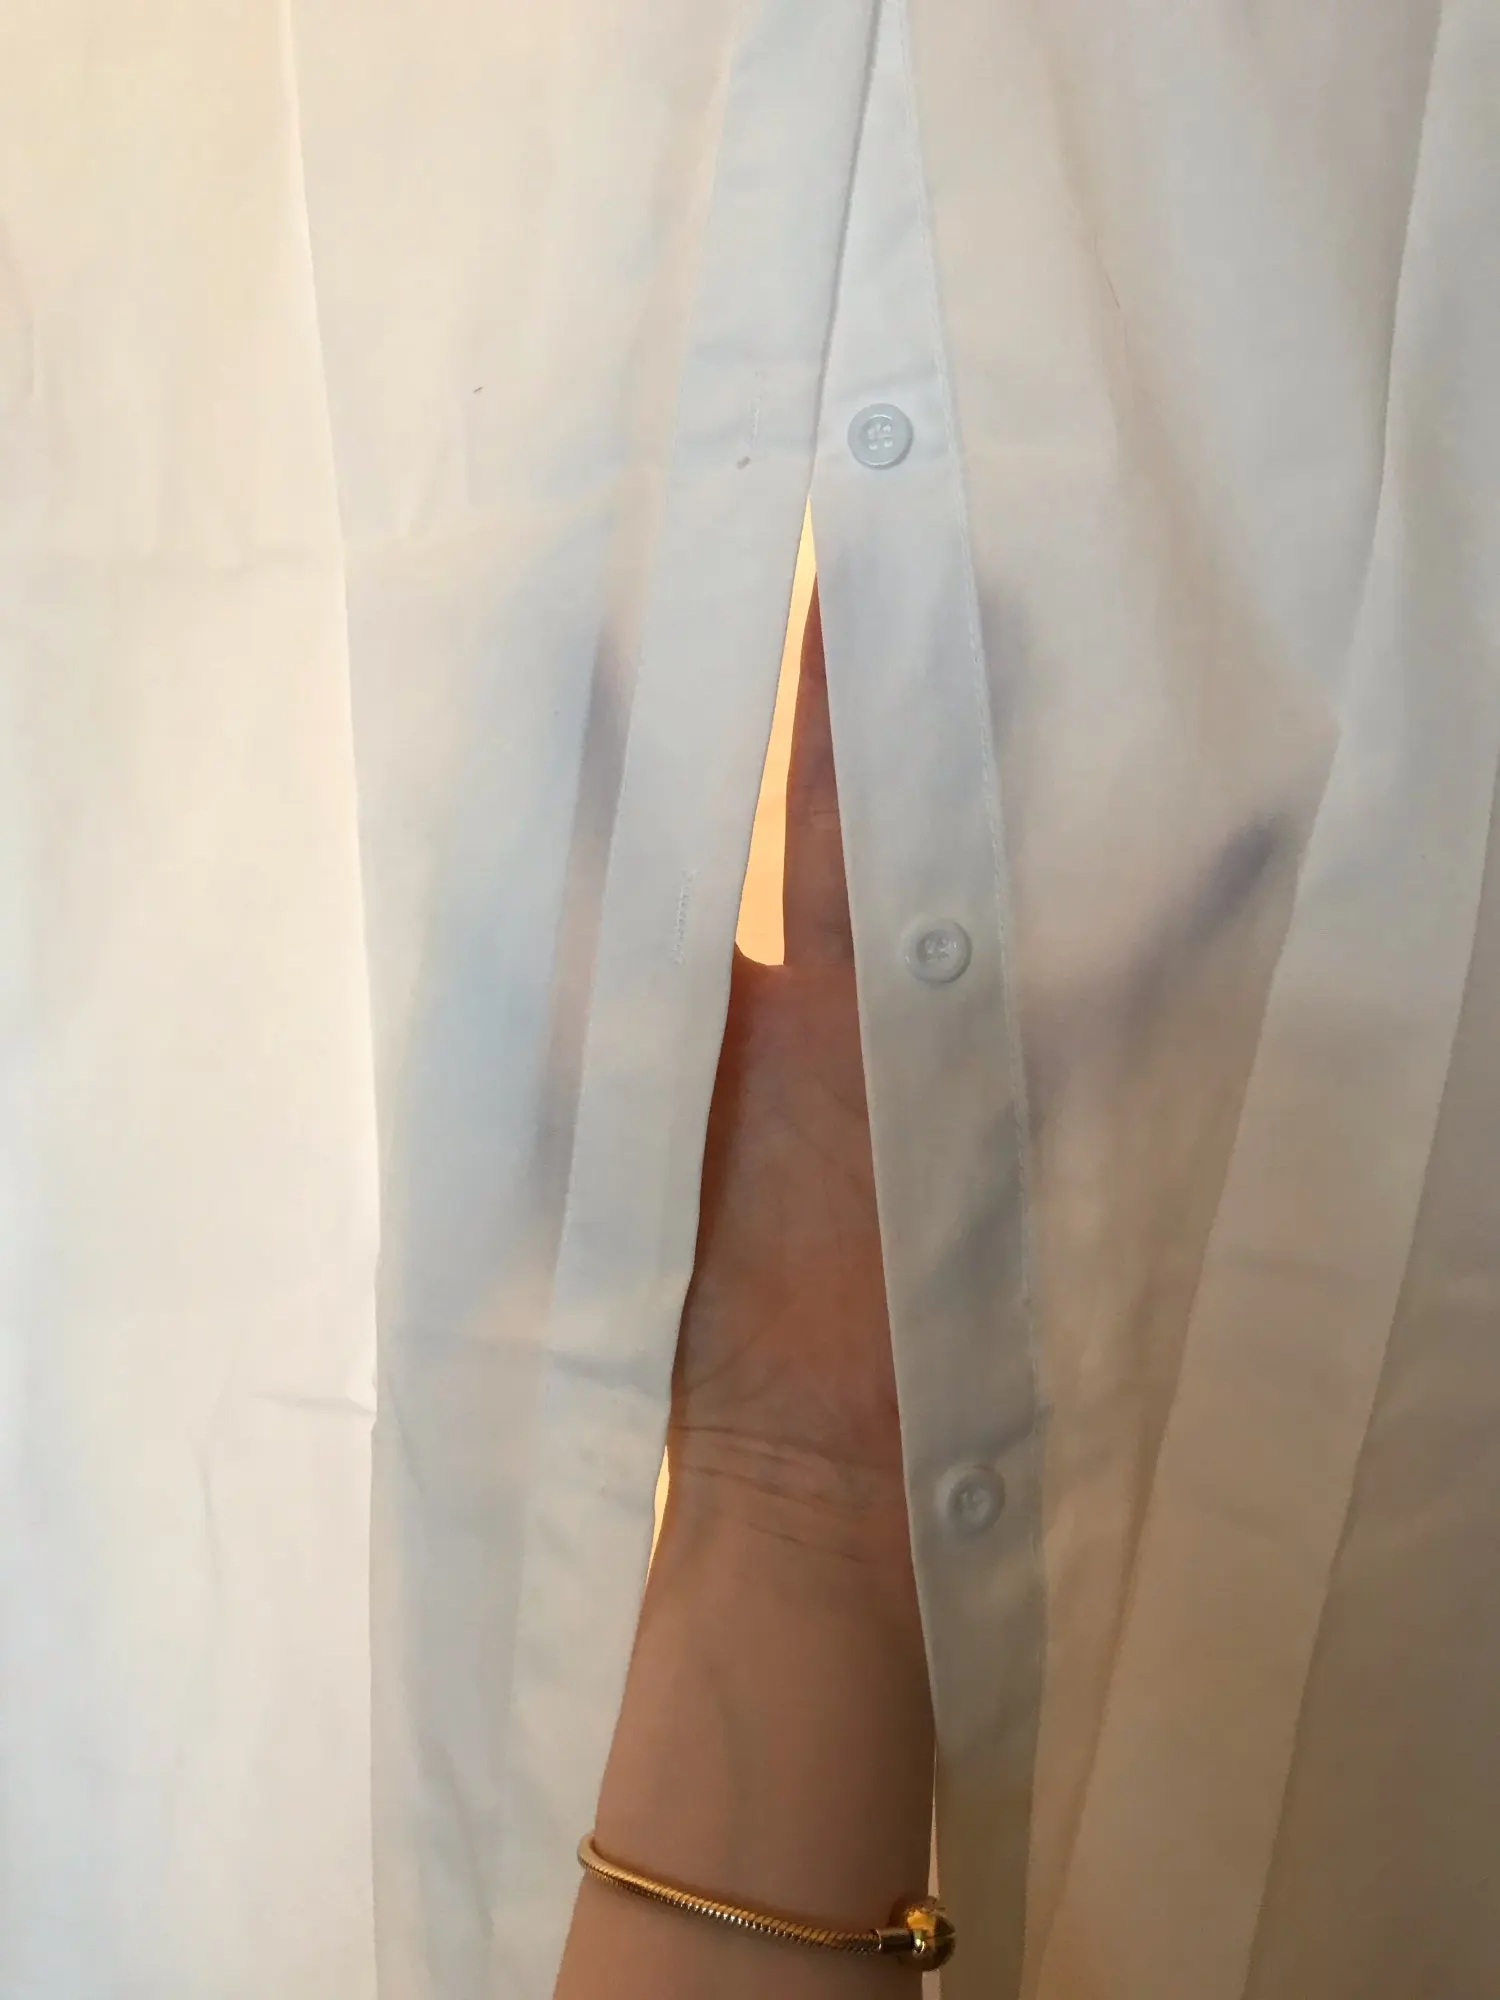 Celmia Fashion Women White Shirt 2021 Autumn Blouses Lapel Casual Solid Long Sleeve Buttons Asymmetric Tunic Top Blusas Oversize photo review